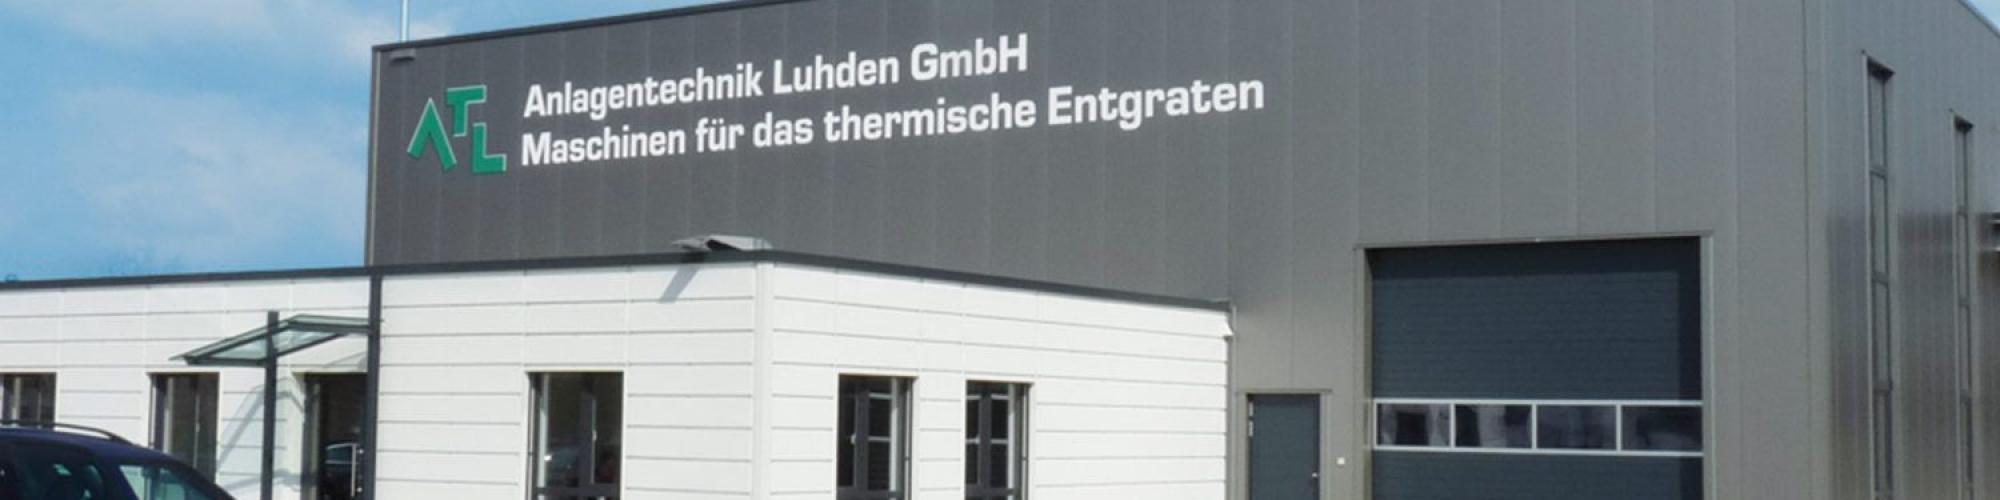 ATL Anlagentechnik Luhden GmbH